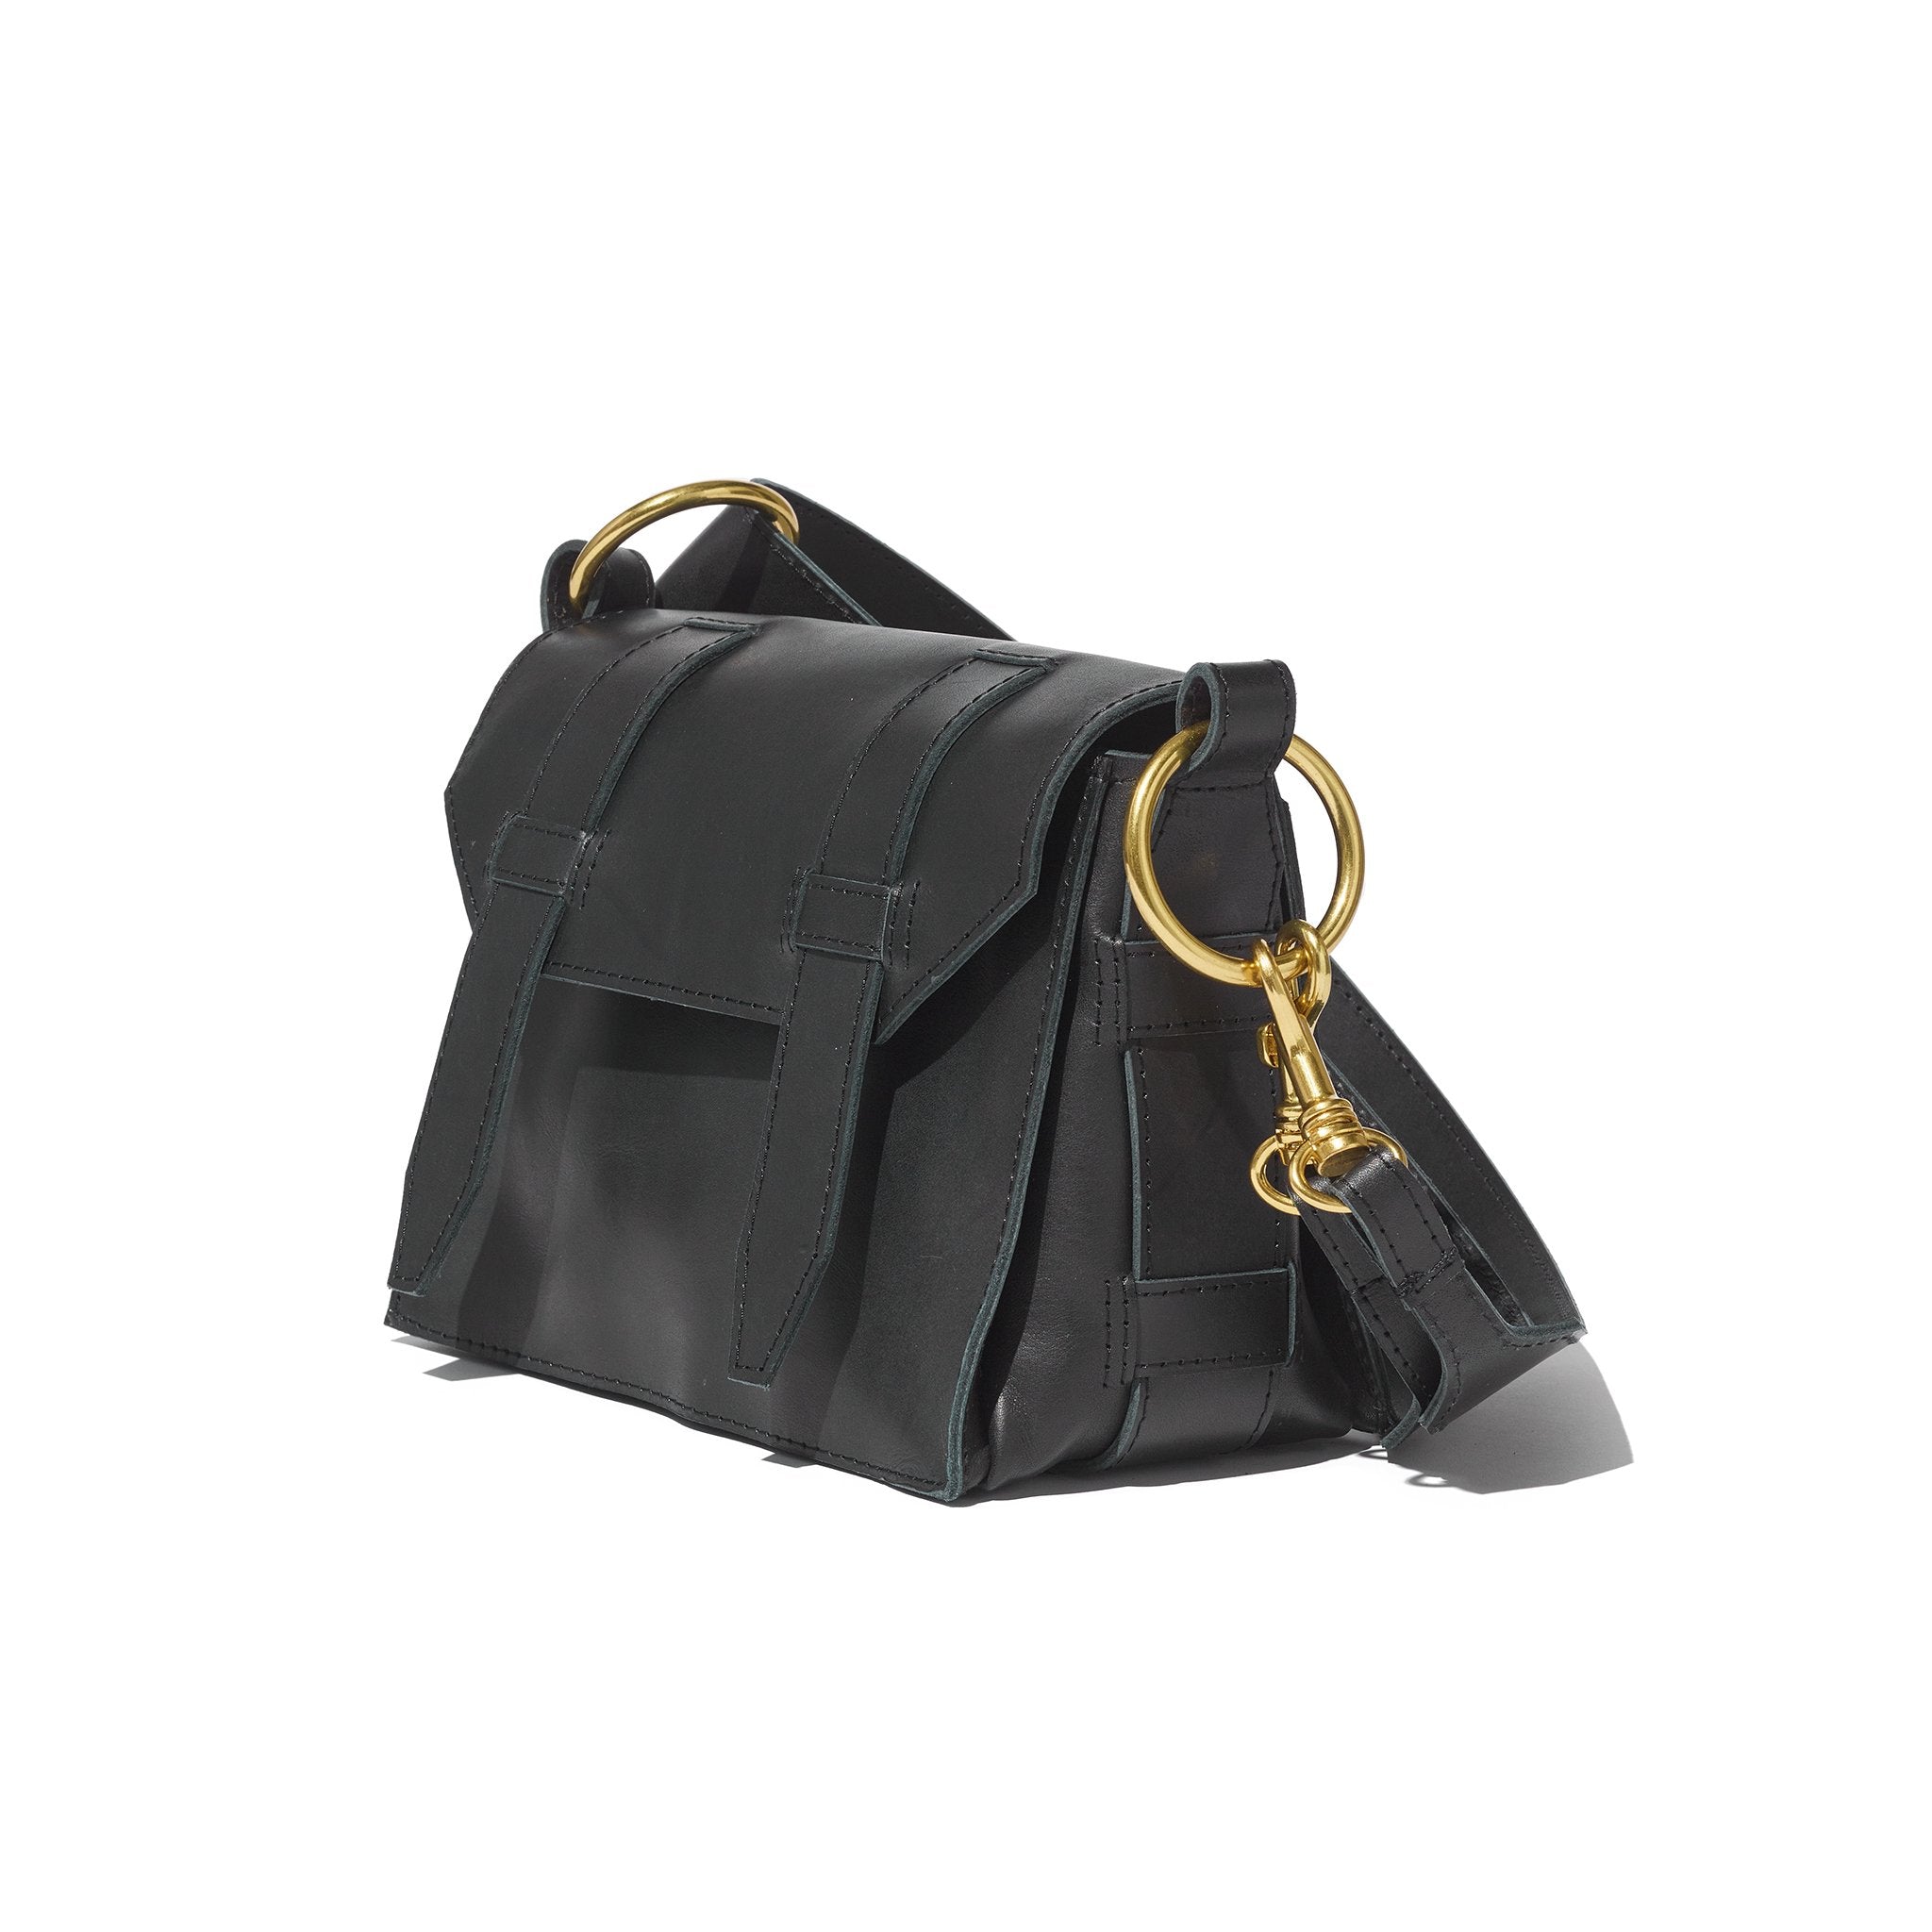 Black Leather Crossbody Day Bag with Zipper — Stitch & Rivet